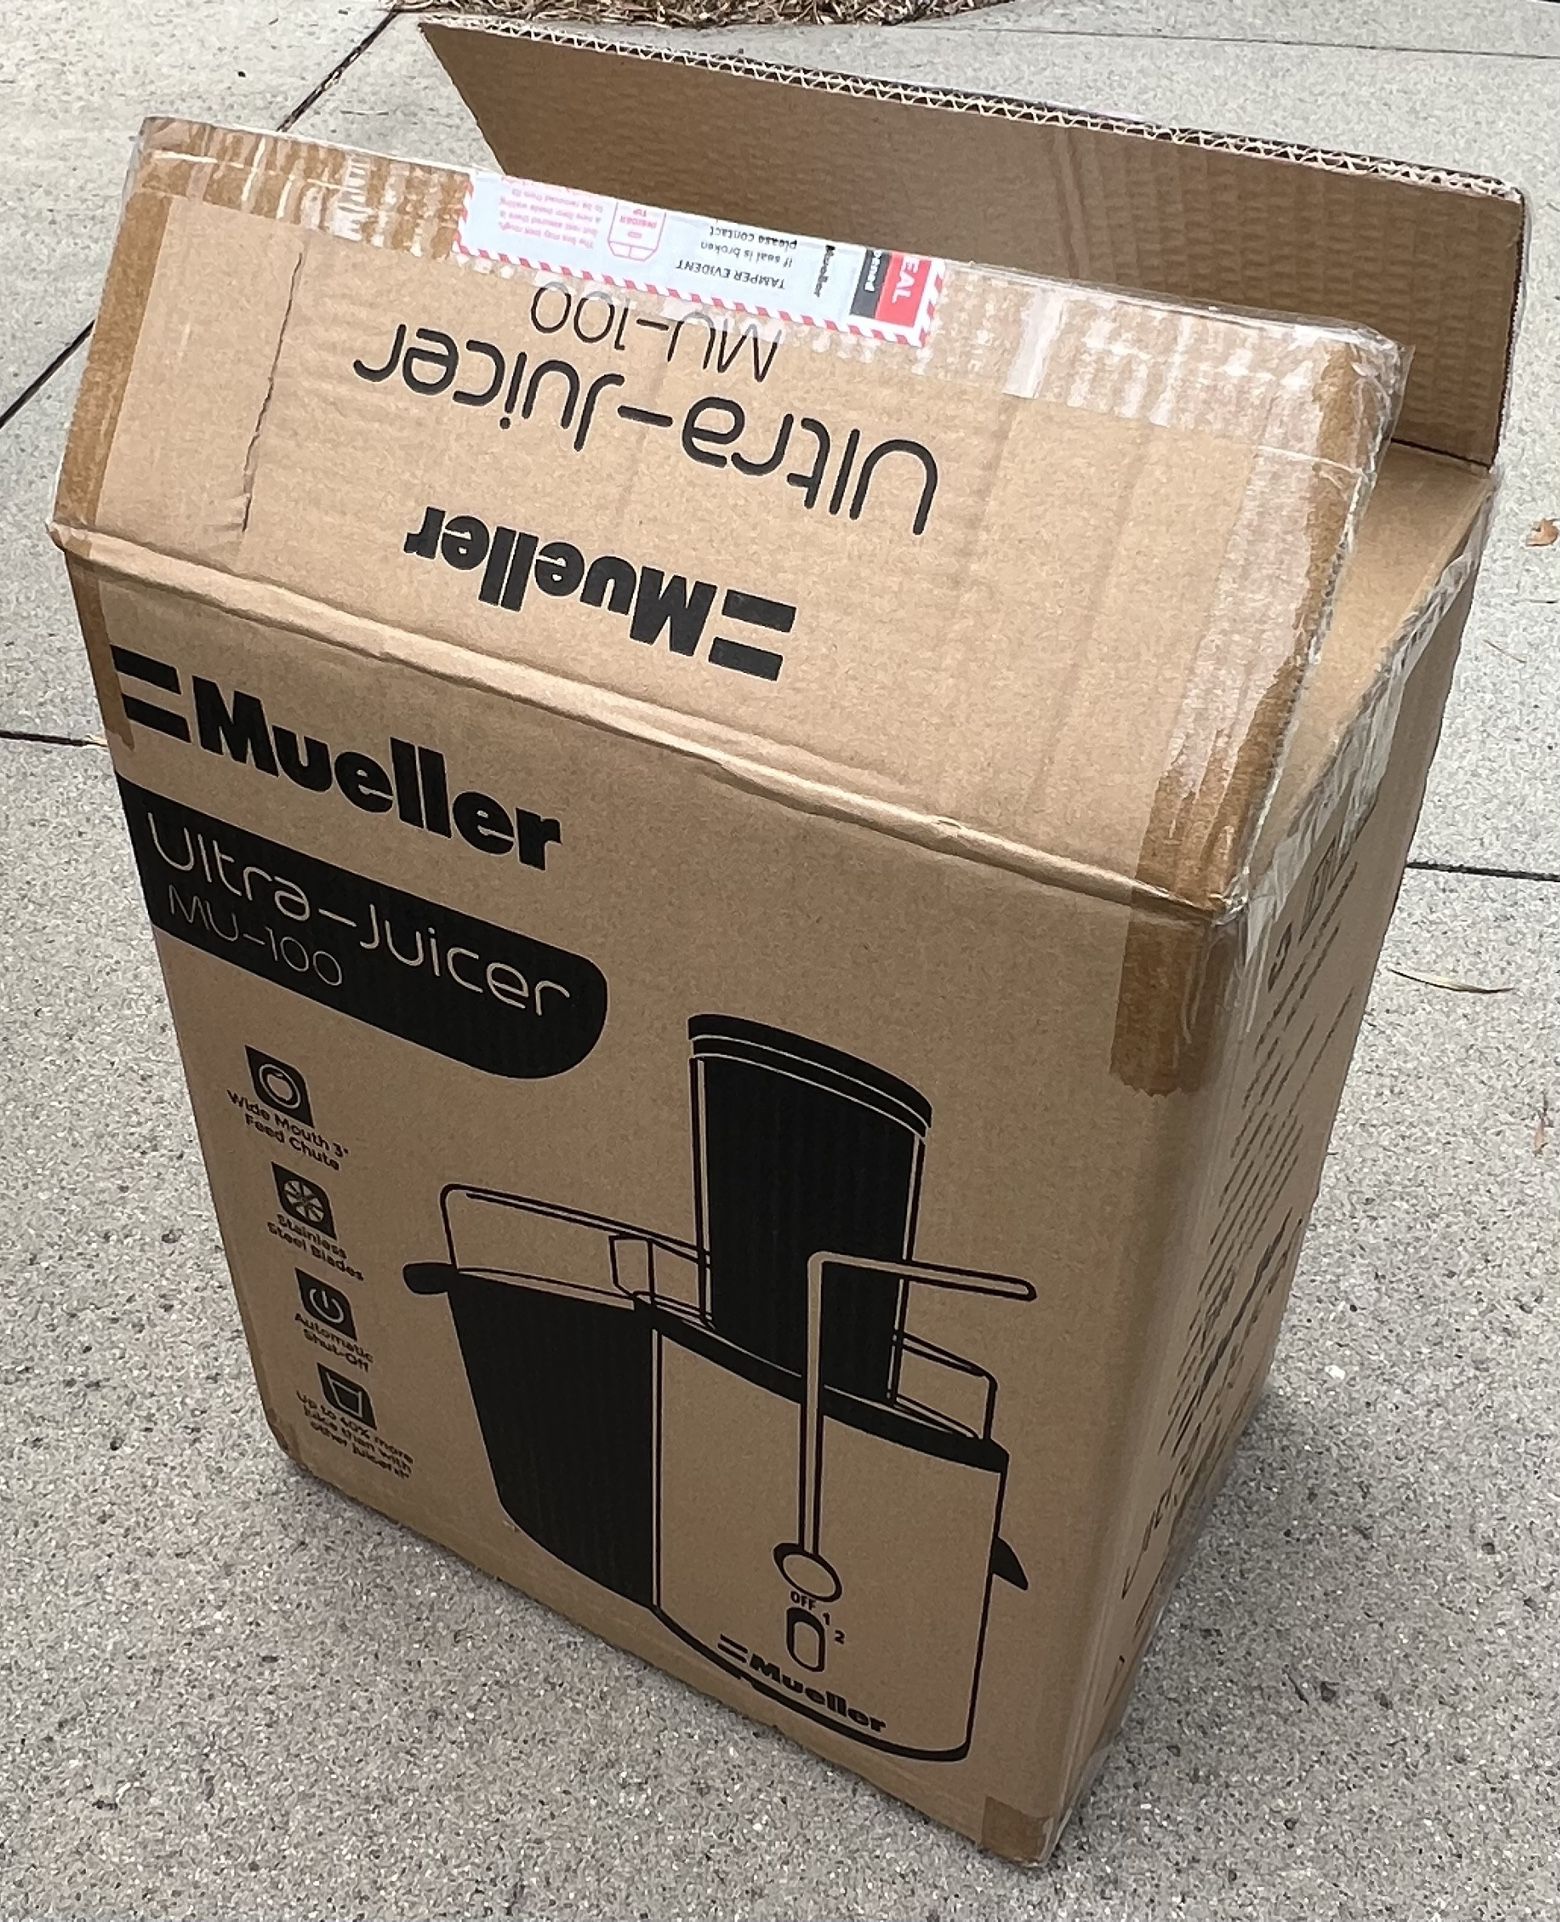 Muller ultra juicer MU 100 for Sale in South Gate, CA - OfferUp